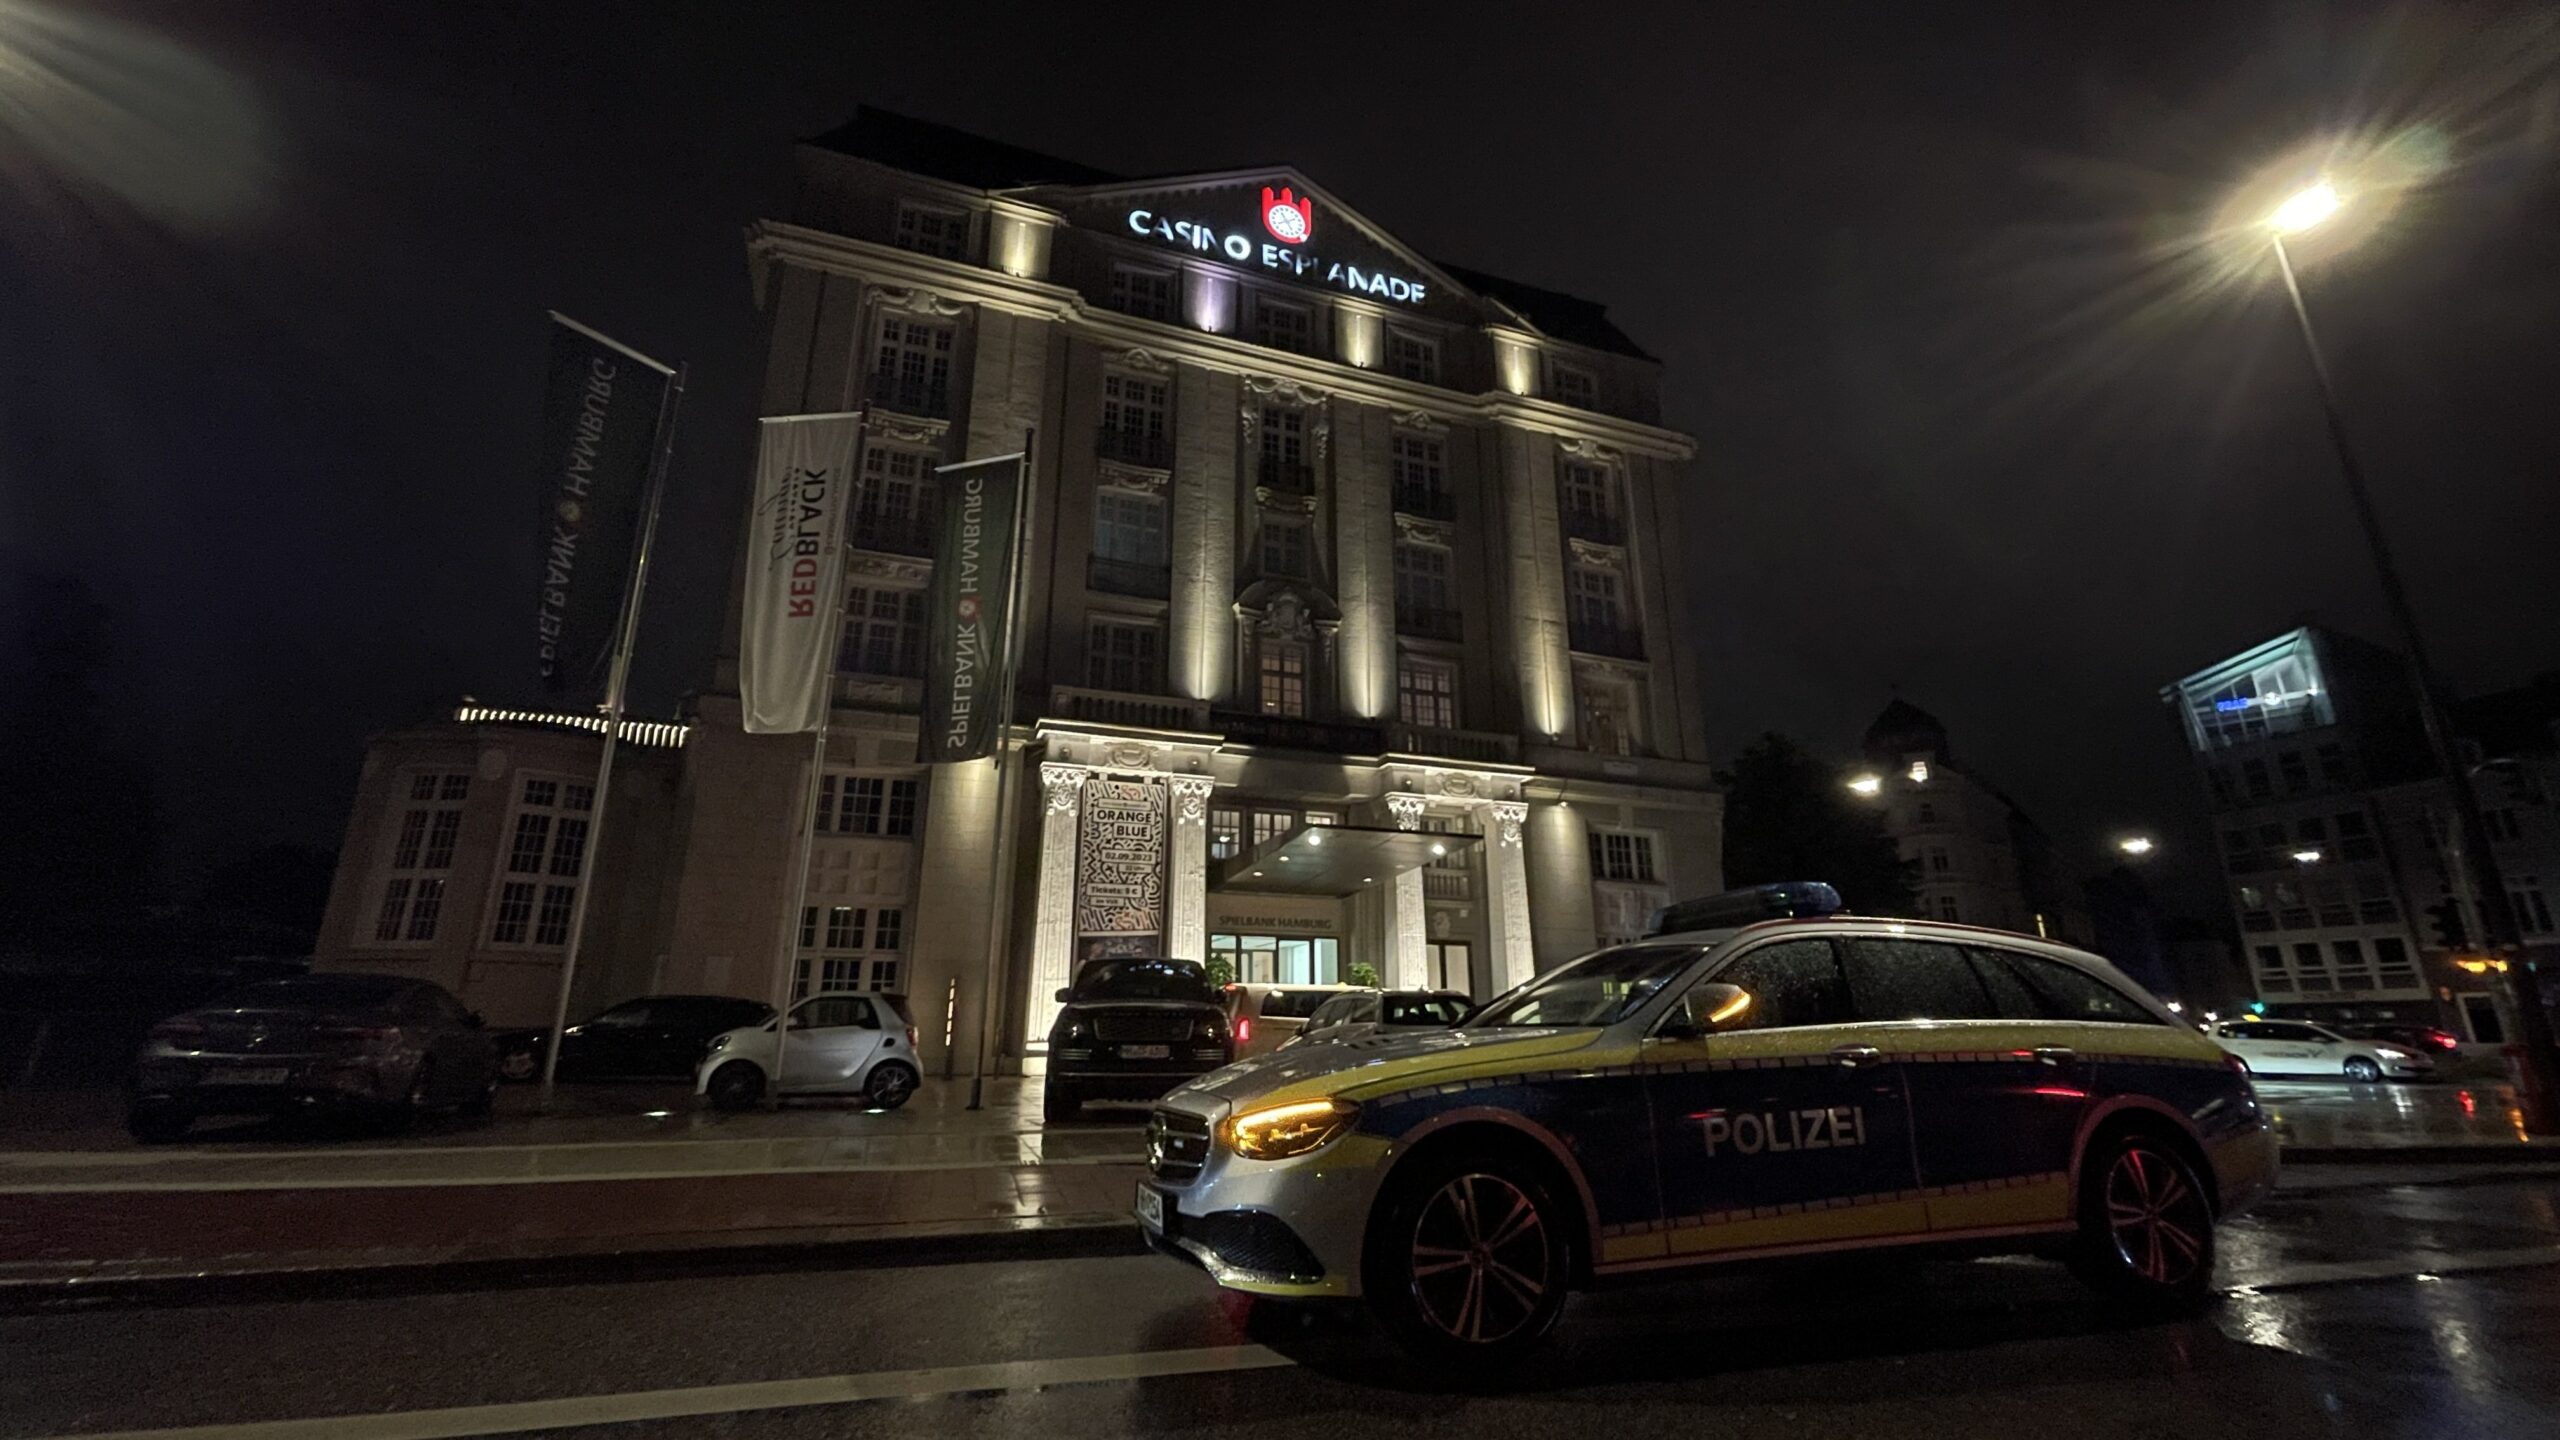 Casino Esplanade Polizei